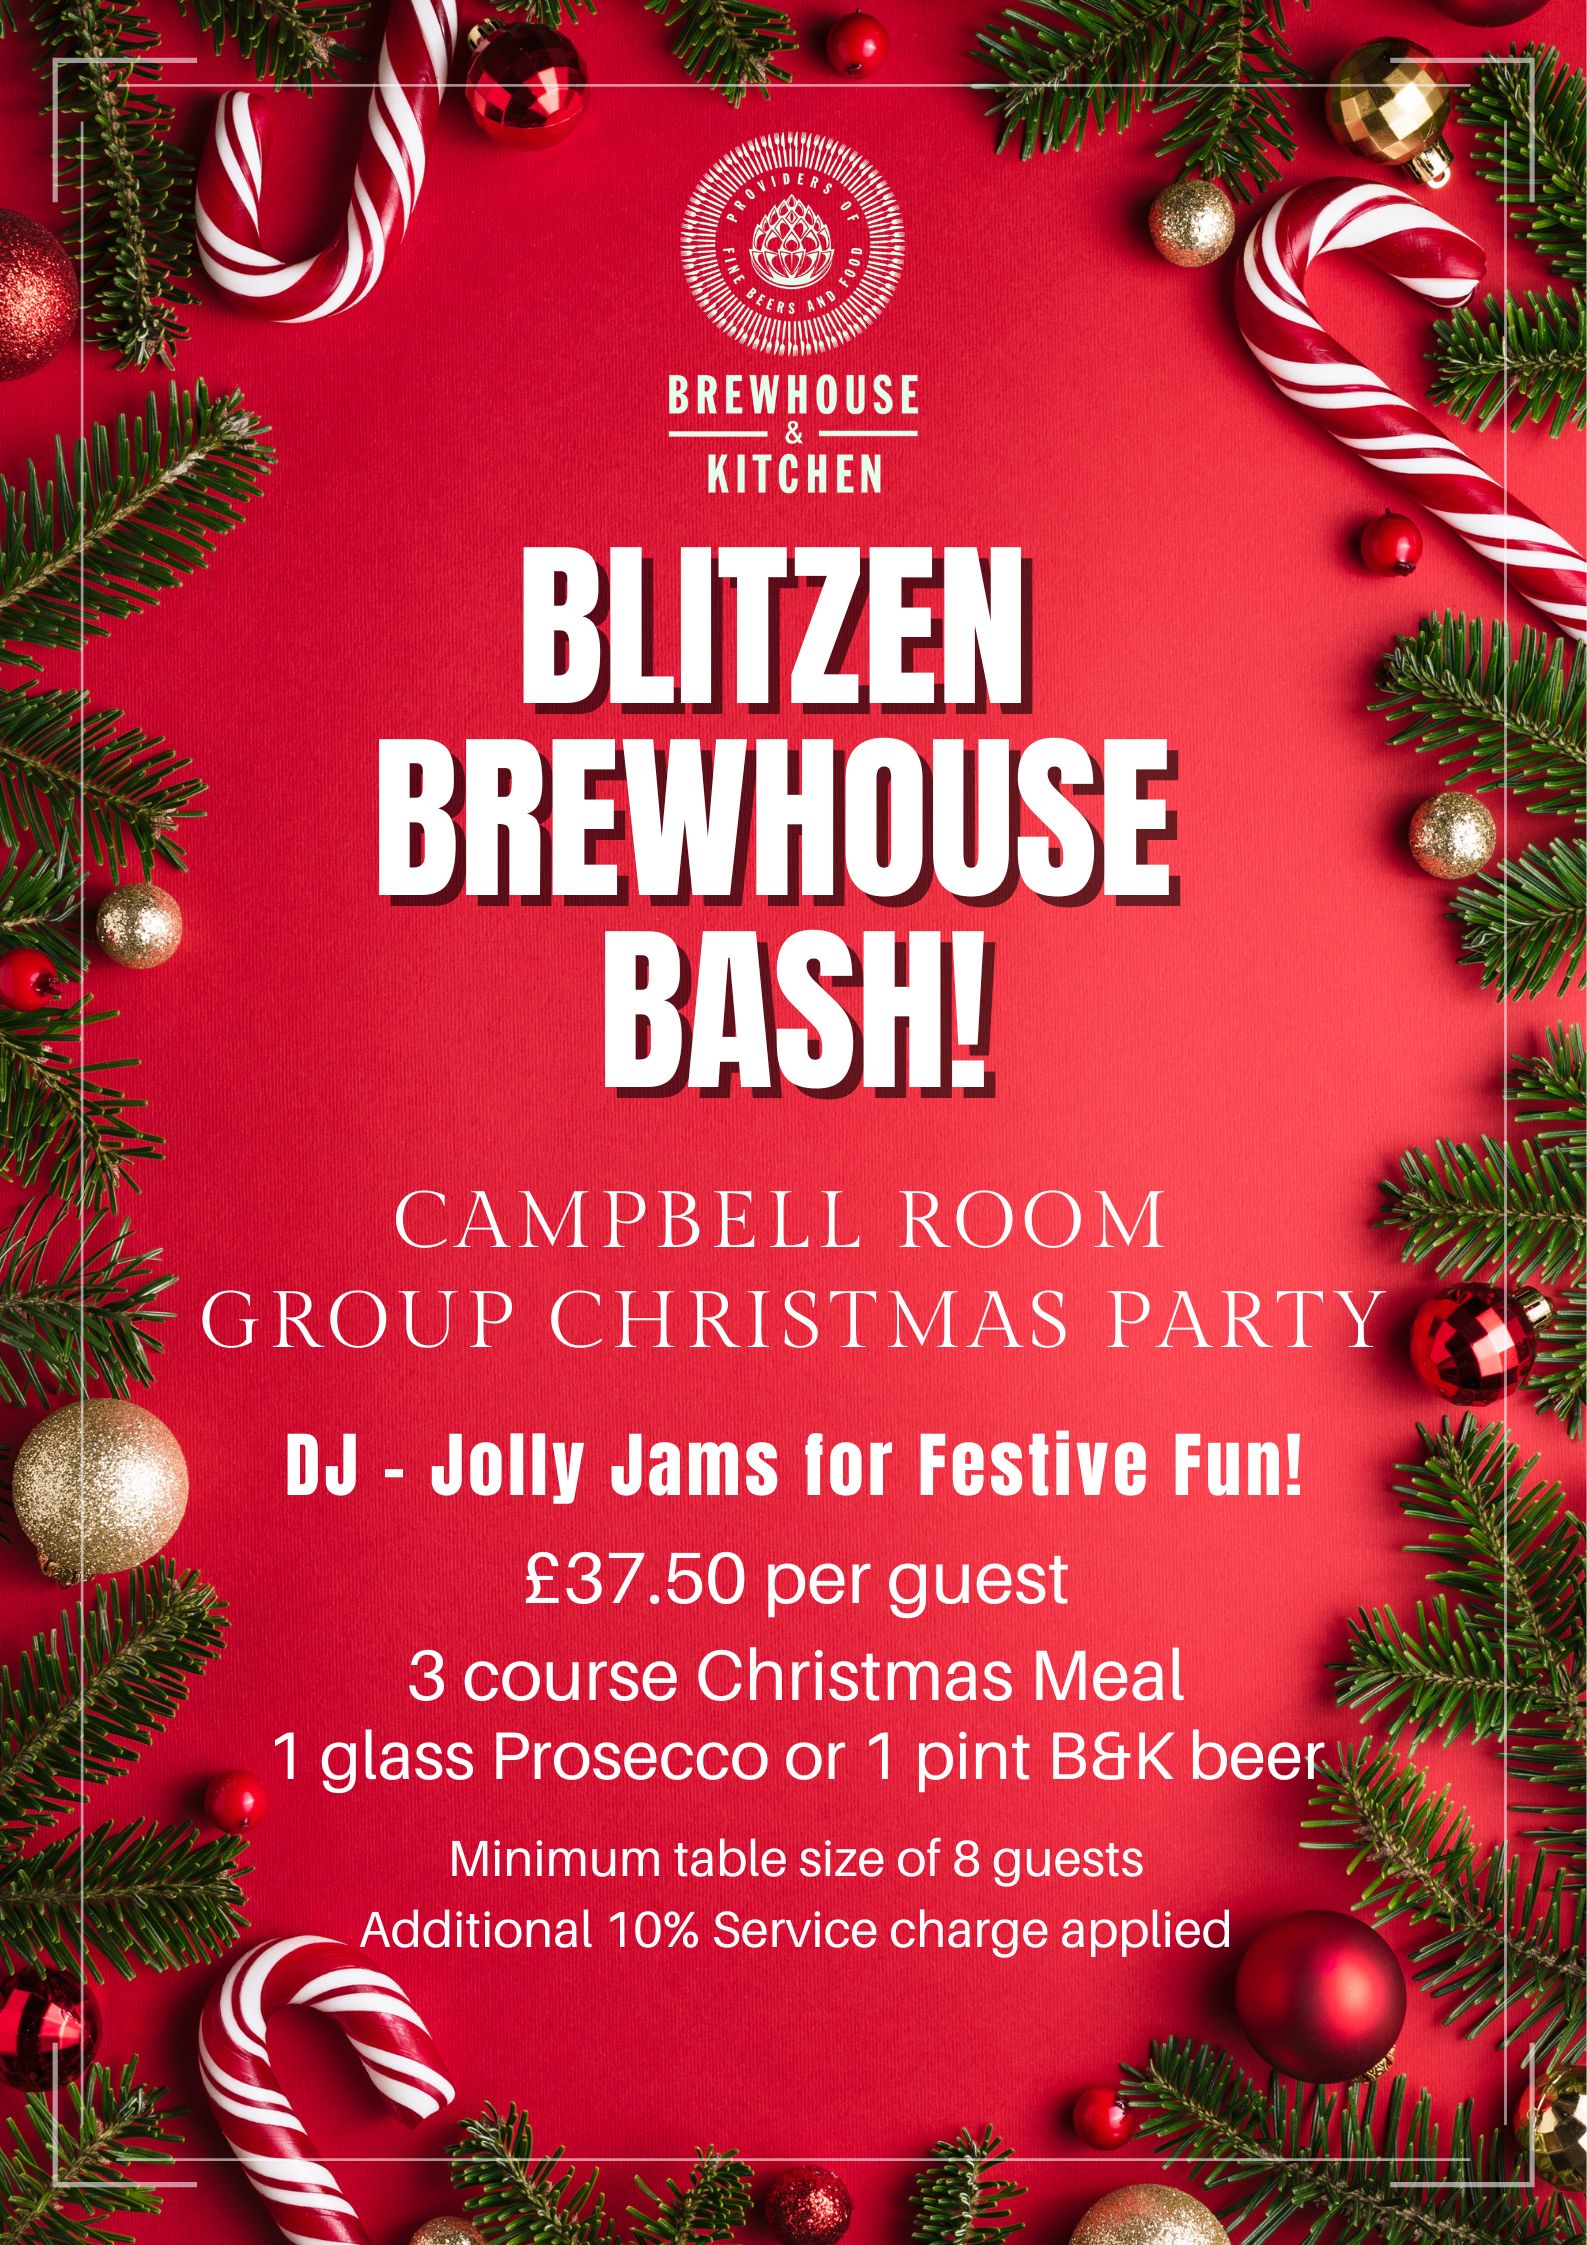 Blitzen Brewhouse Bash! Group Christmas Party Top Image